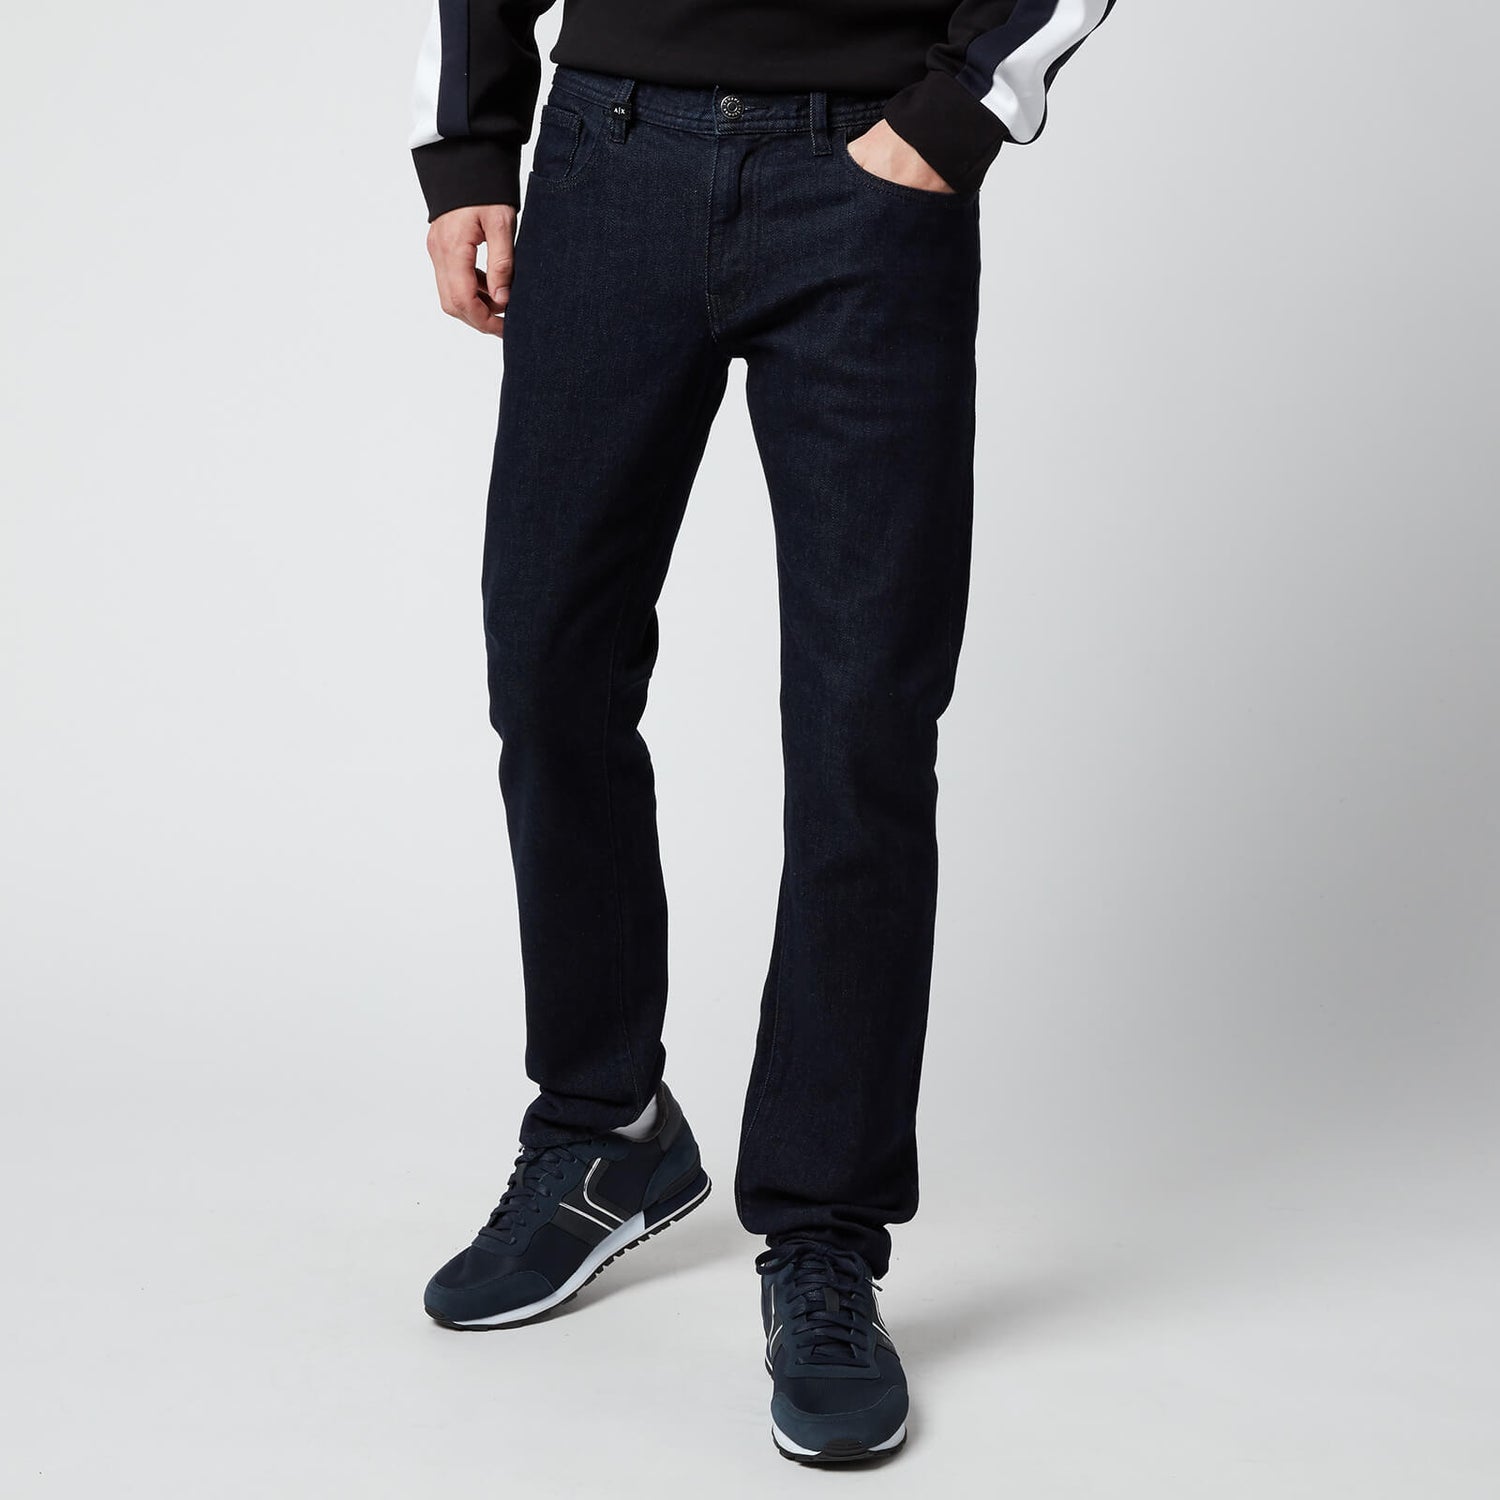 Armani Exchange Men's Slim Denim Jeans - Indigo